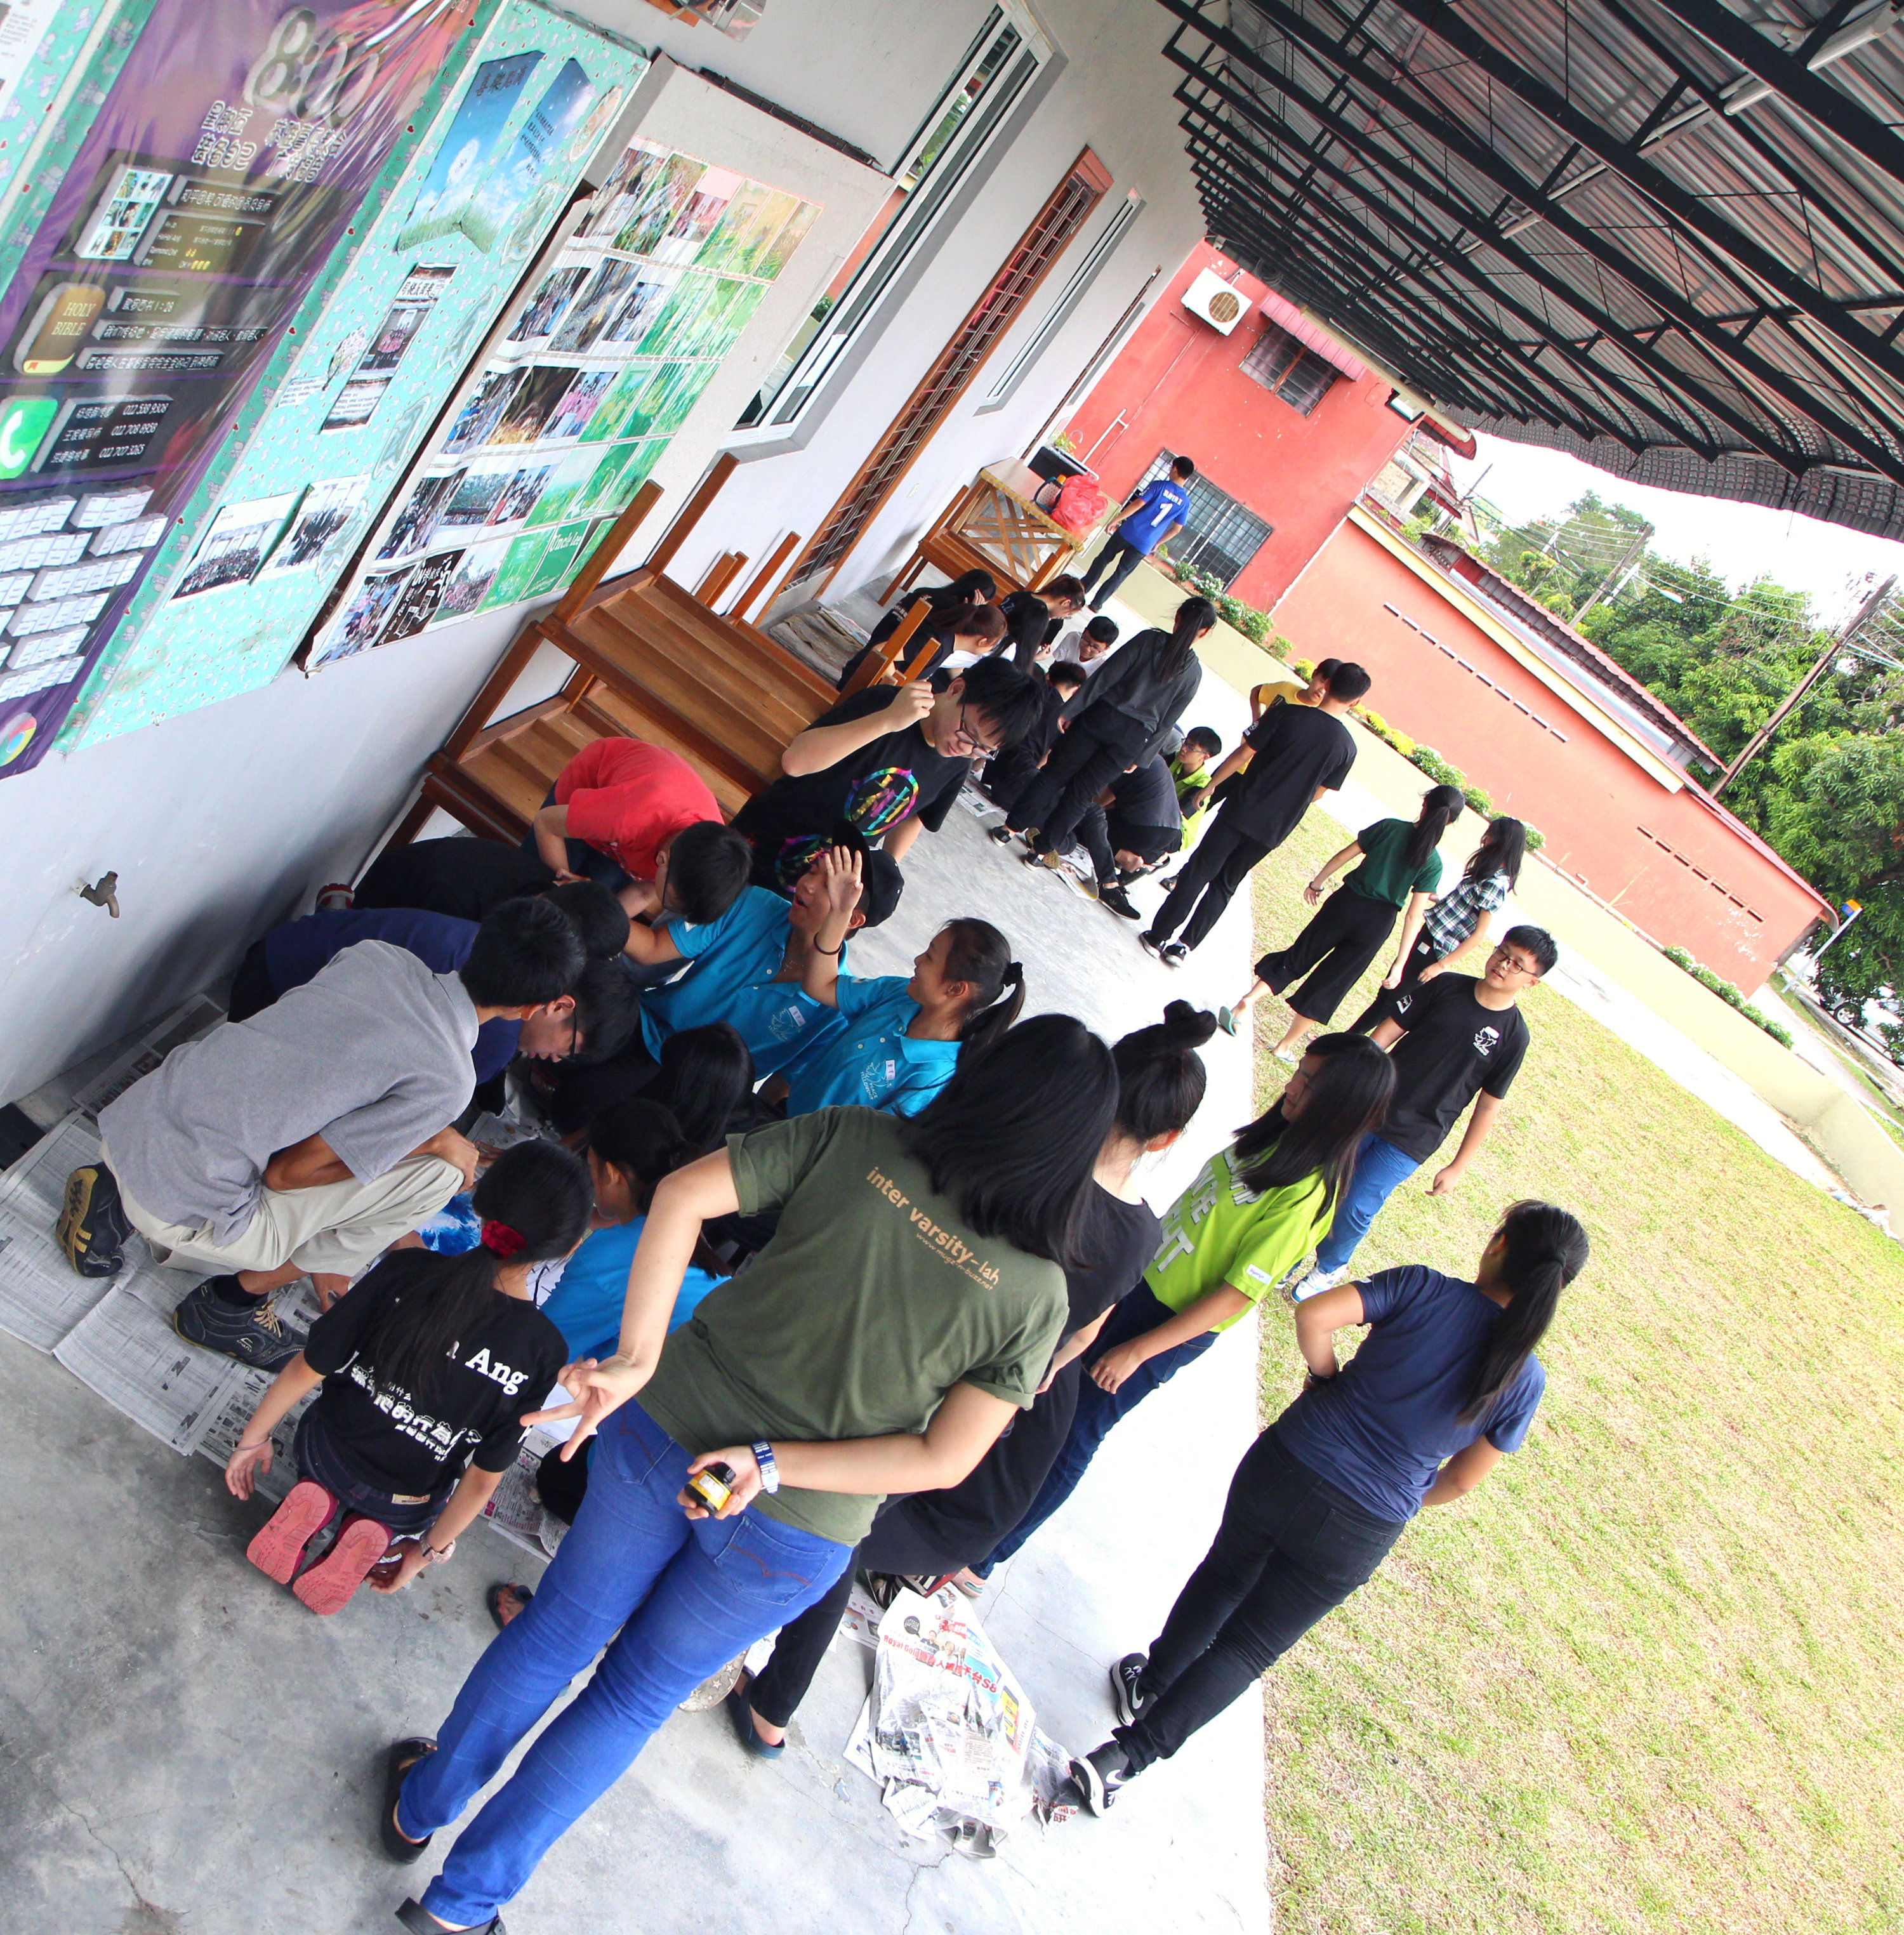 马来西亚 柔佛 峇株巴辖 苏雅喜乐马来西亚 柔佛 峇株巴辖 苏雅喜乐堂 和平团契 少年 一日营会 3月 23日 2018年 门训生 Malaysia Johor Batu Pahat Gereja Joy Soga Peace Fellowship Youth One Day Camp 23 Mar 2018 A35